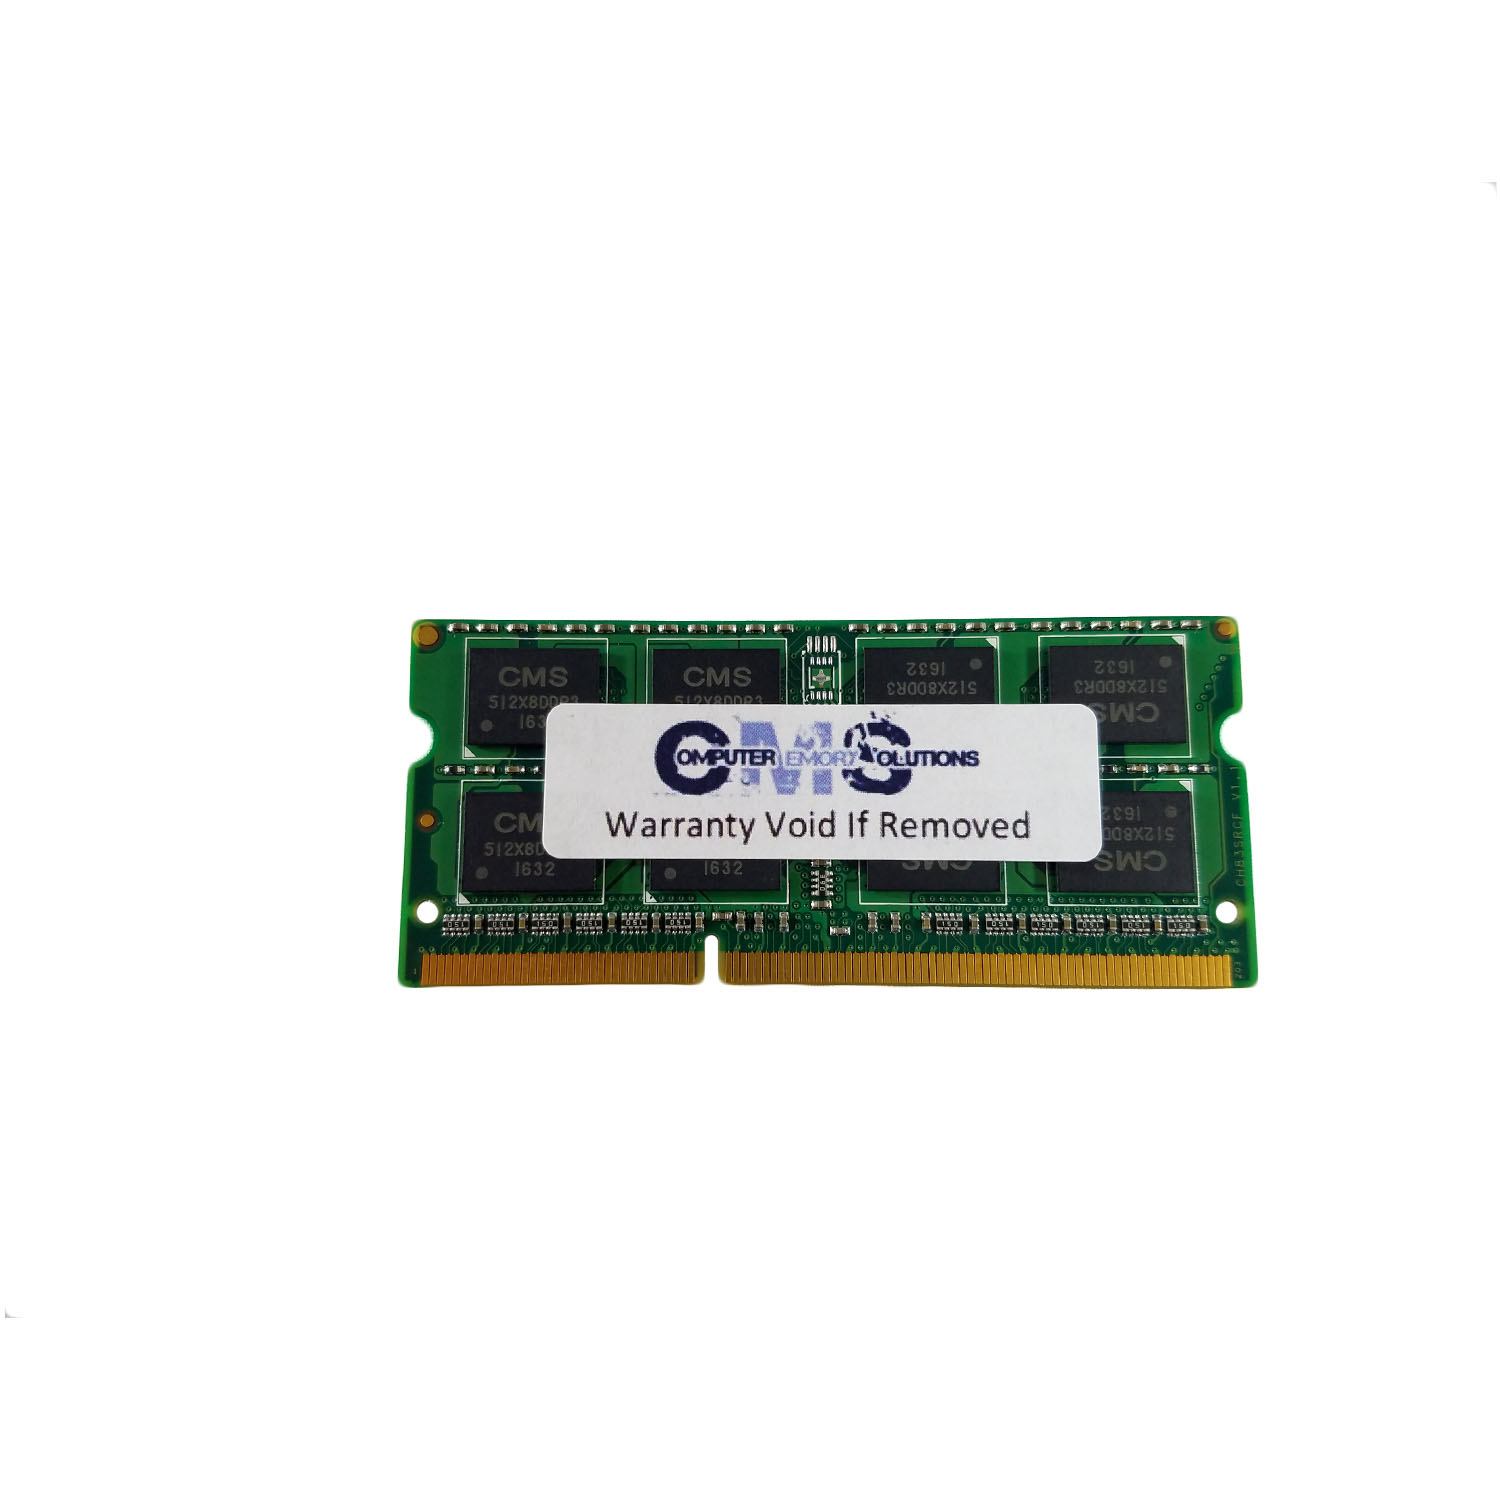 CMS 2GB (1X2GB) DDR3 10600 1333MHZ NON ECC SODIMM Memory Ram Upgrade Compatible with Lenovo® Thinkpad L412, L420, L512, L520 Ddr3-1333 - A44 - image 1 of 2